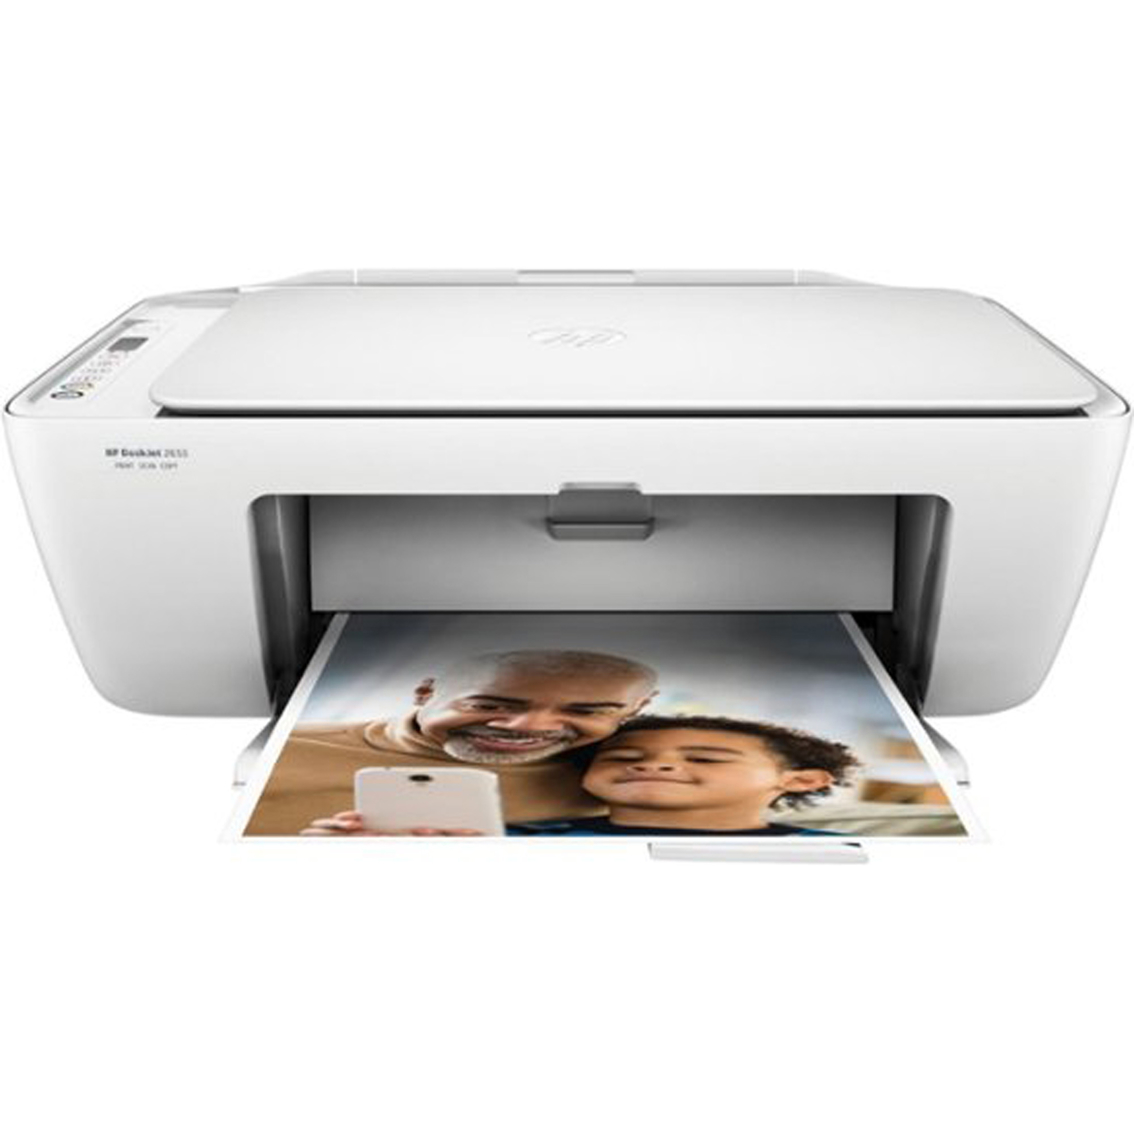 Hp Deskjet 2755 All-in-one Printer | All-in-one Printers ...